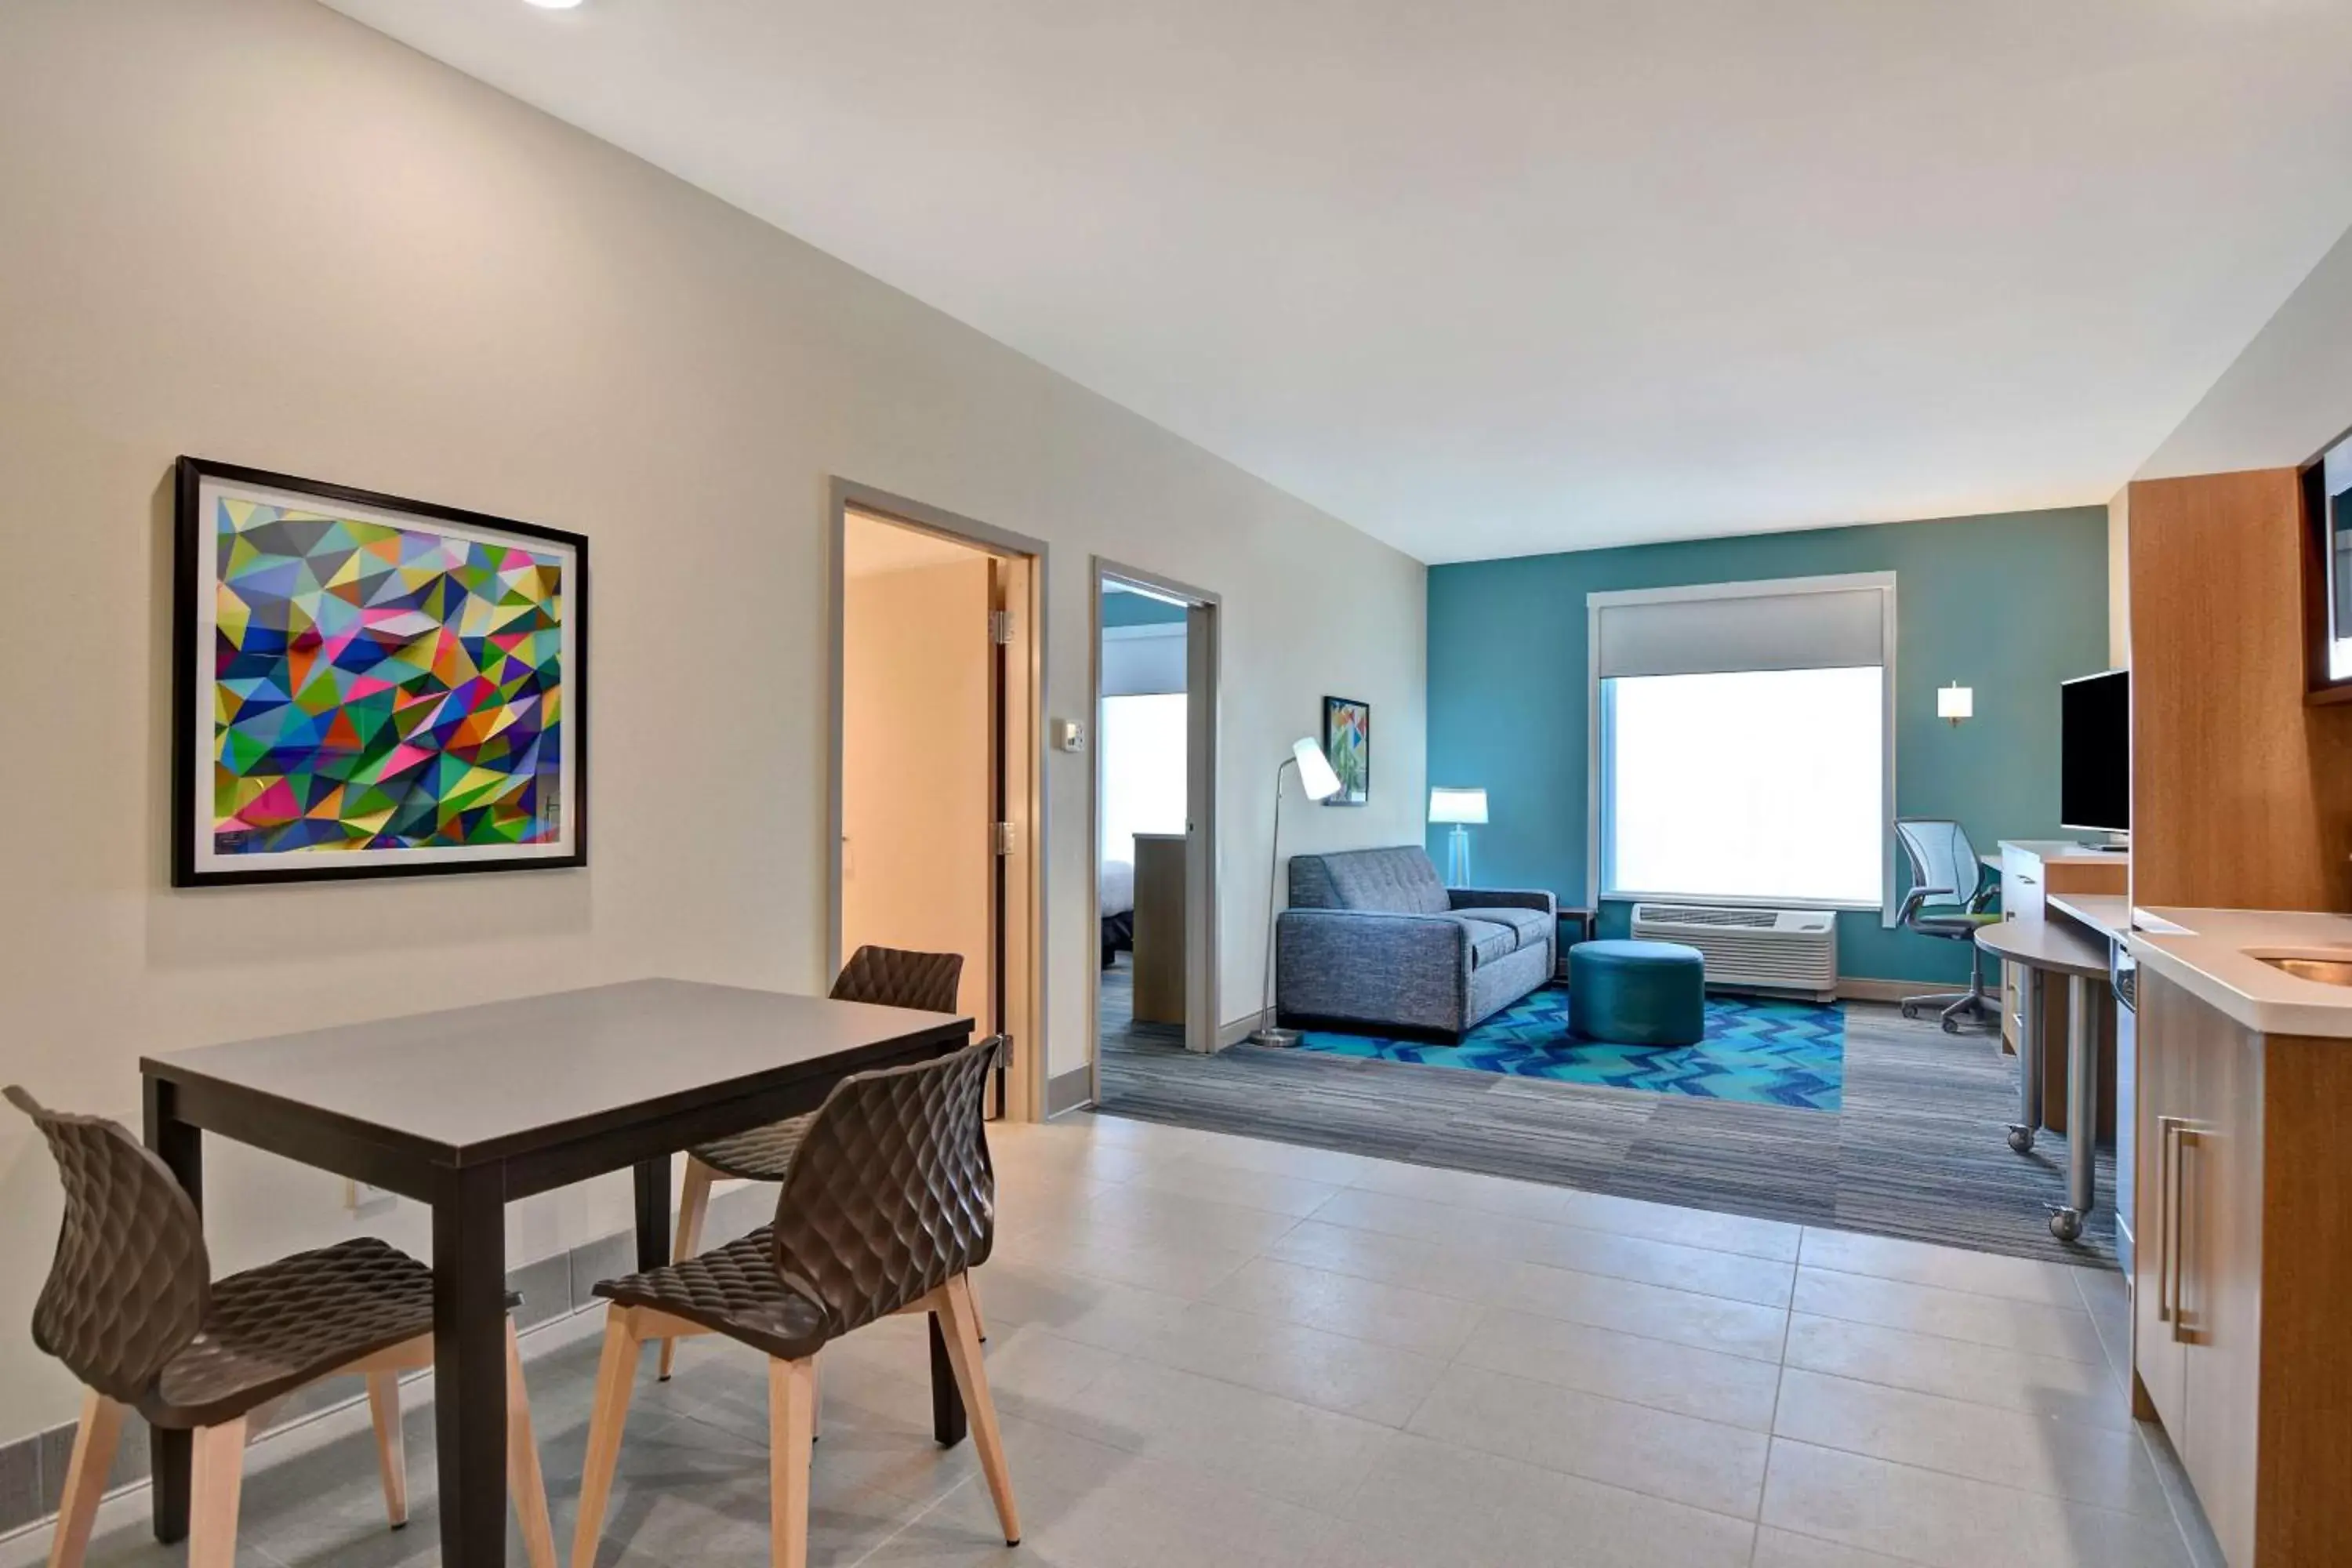 Bedroom, Dining Area in Home2 Suites By Hilton Savannah Midtown, Ga